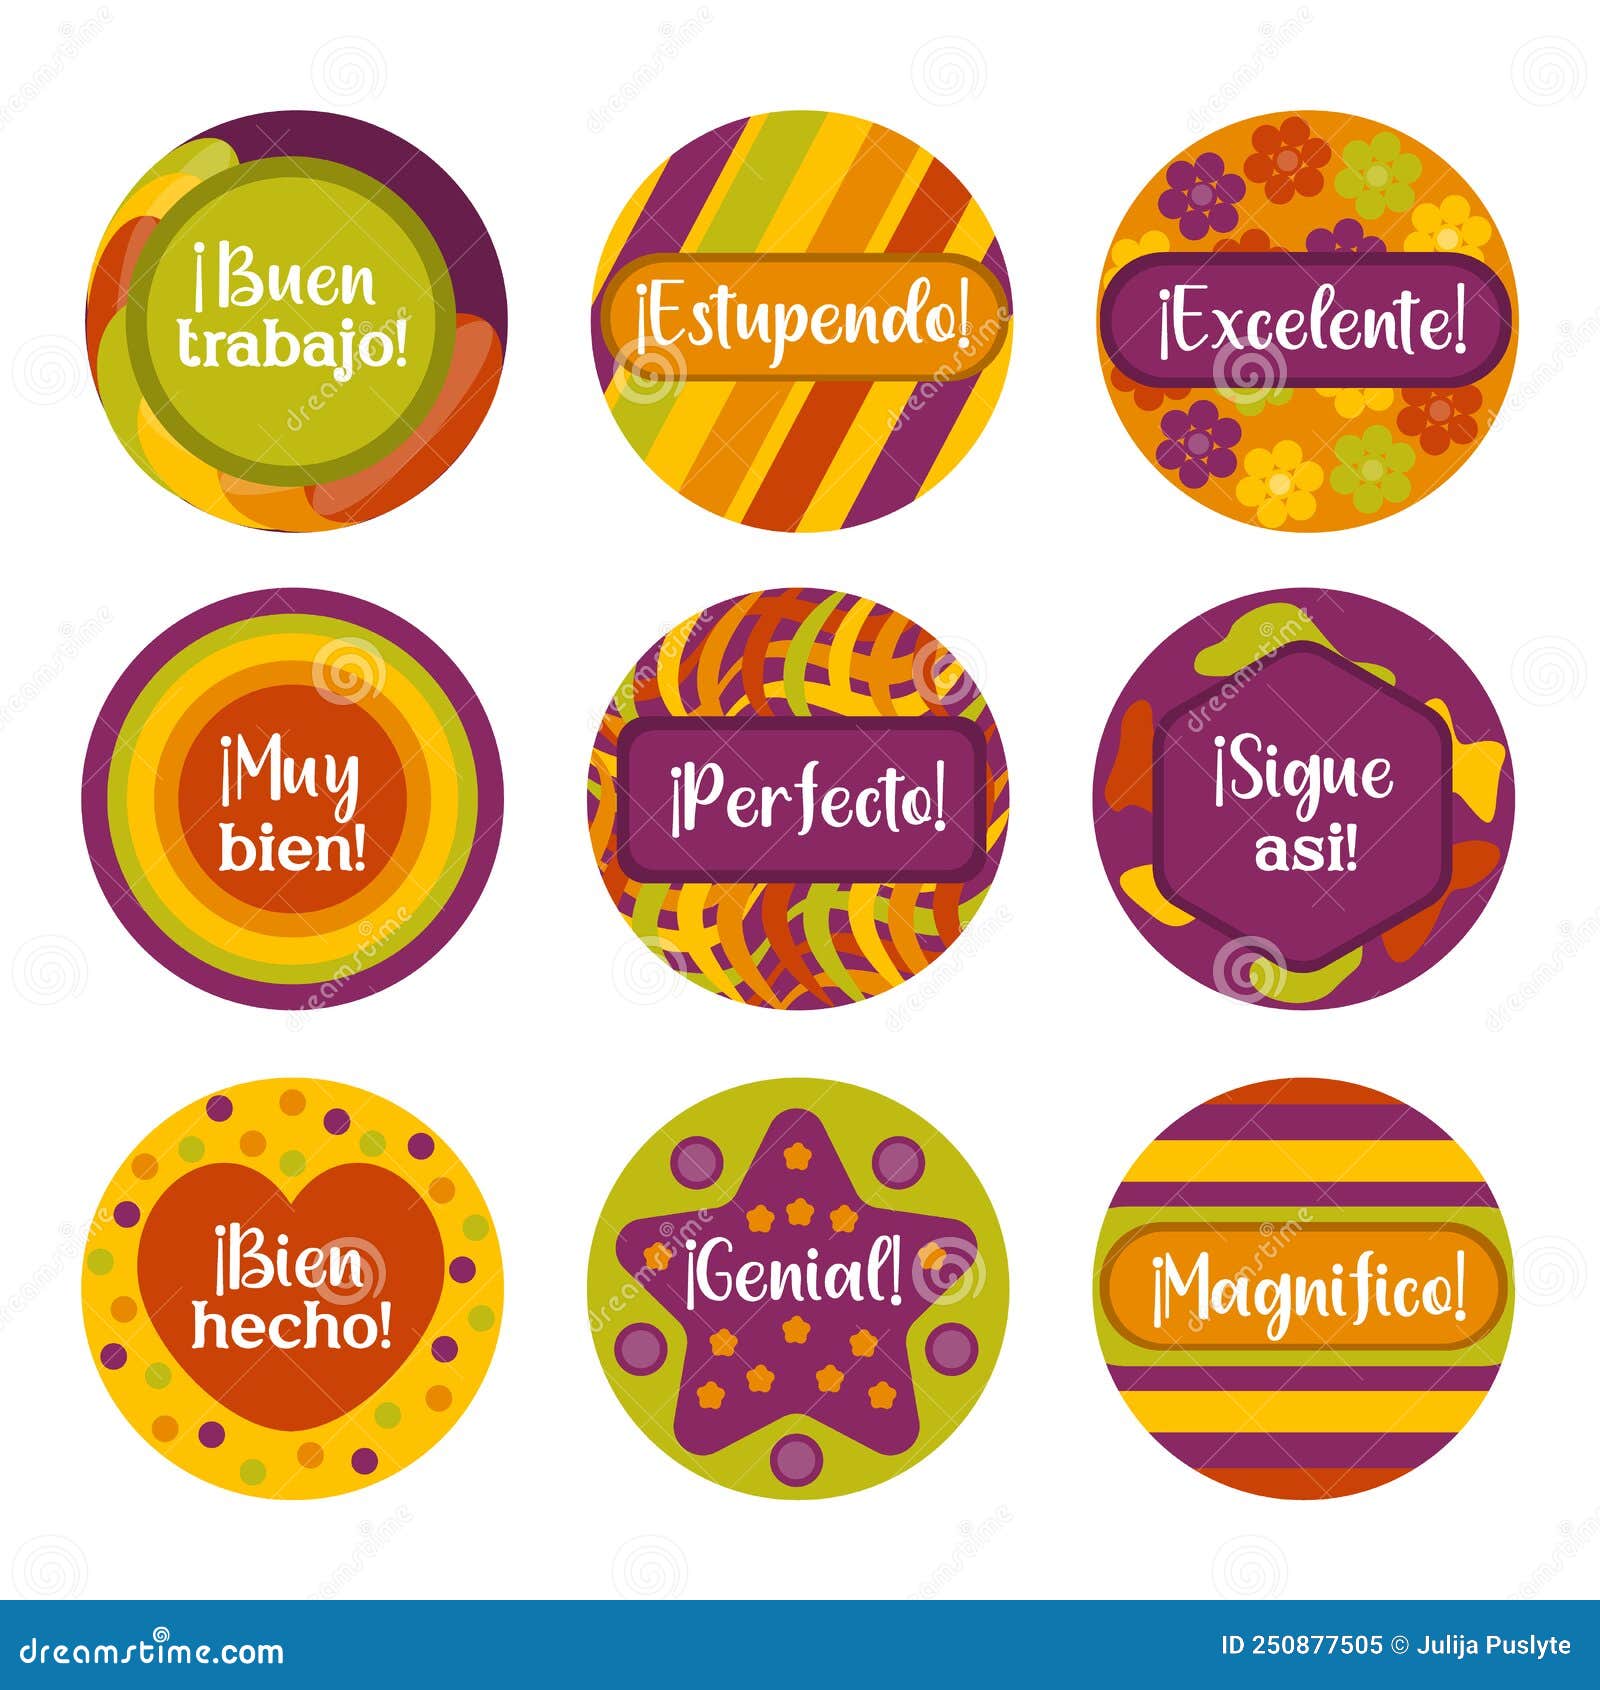 reward stickers for kids, printable teacher stickers spanish